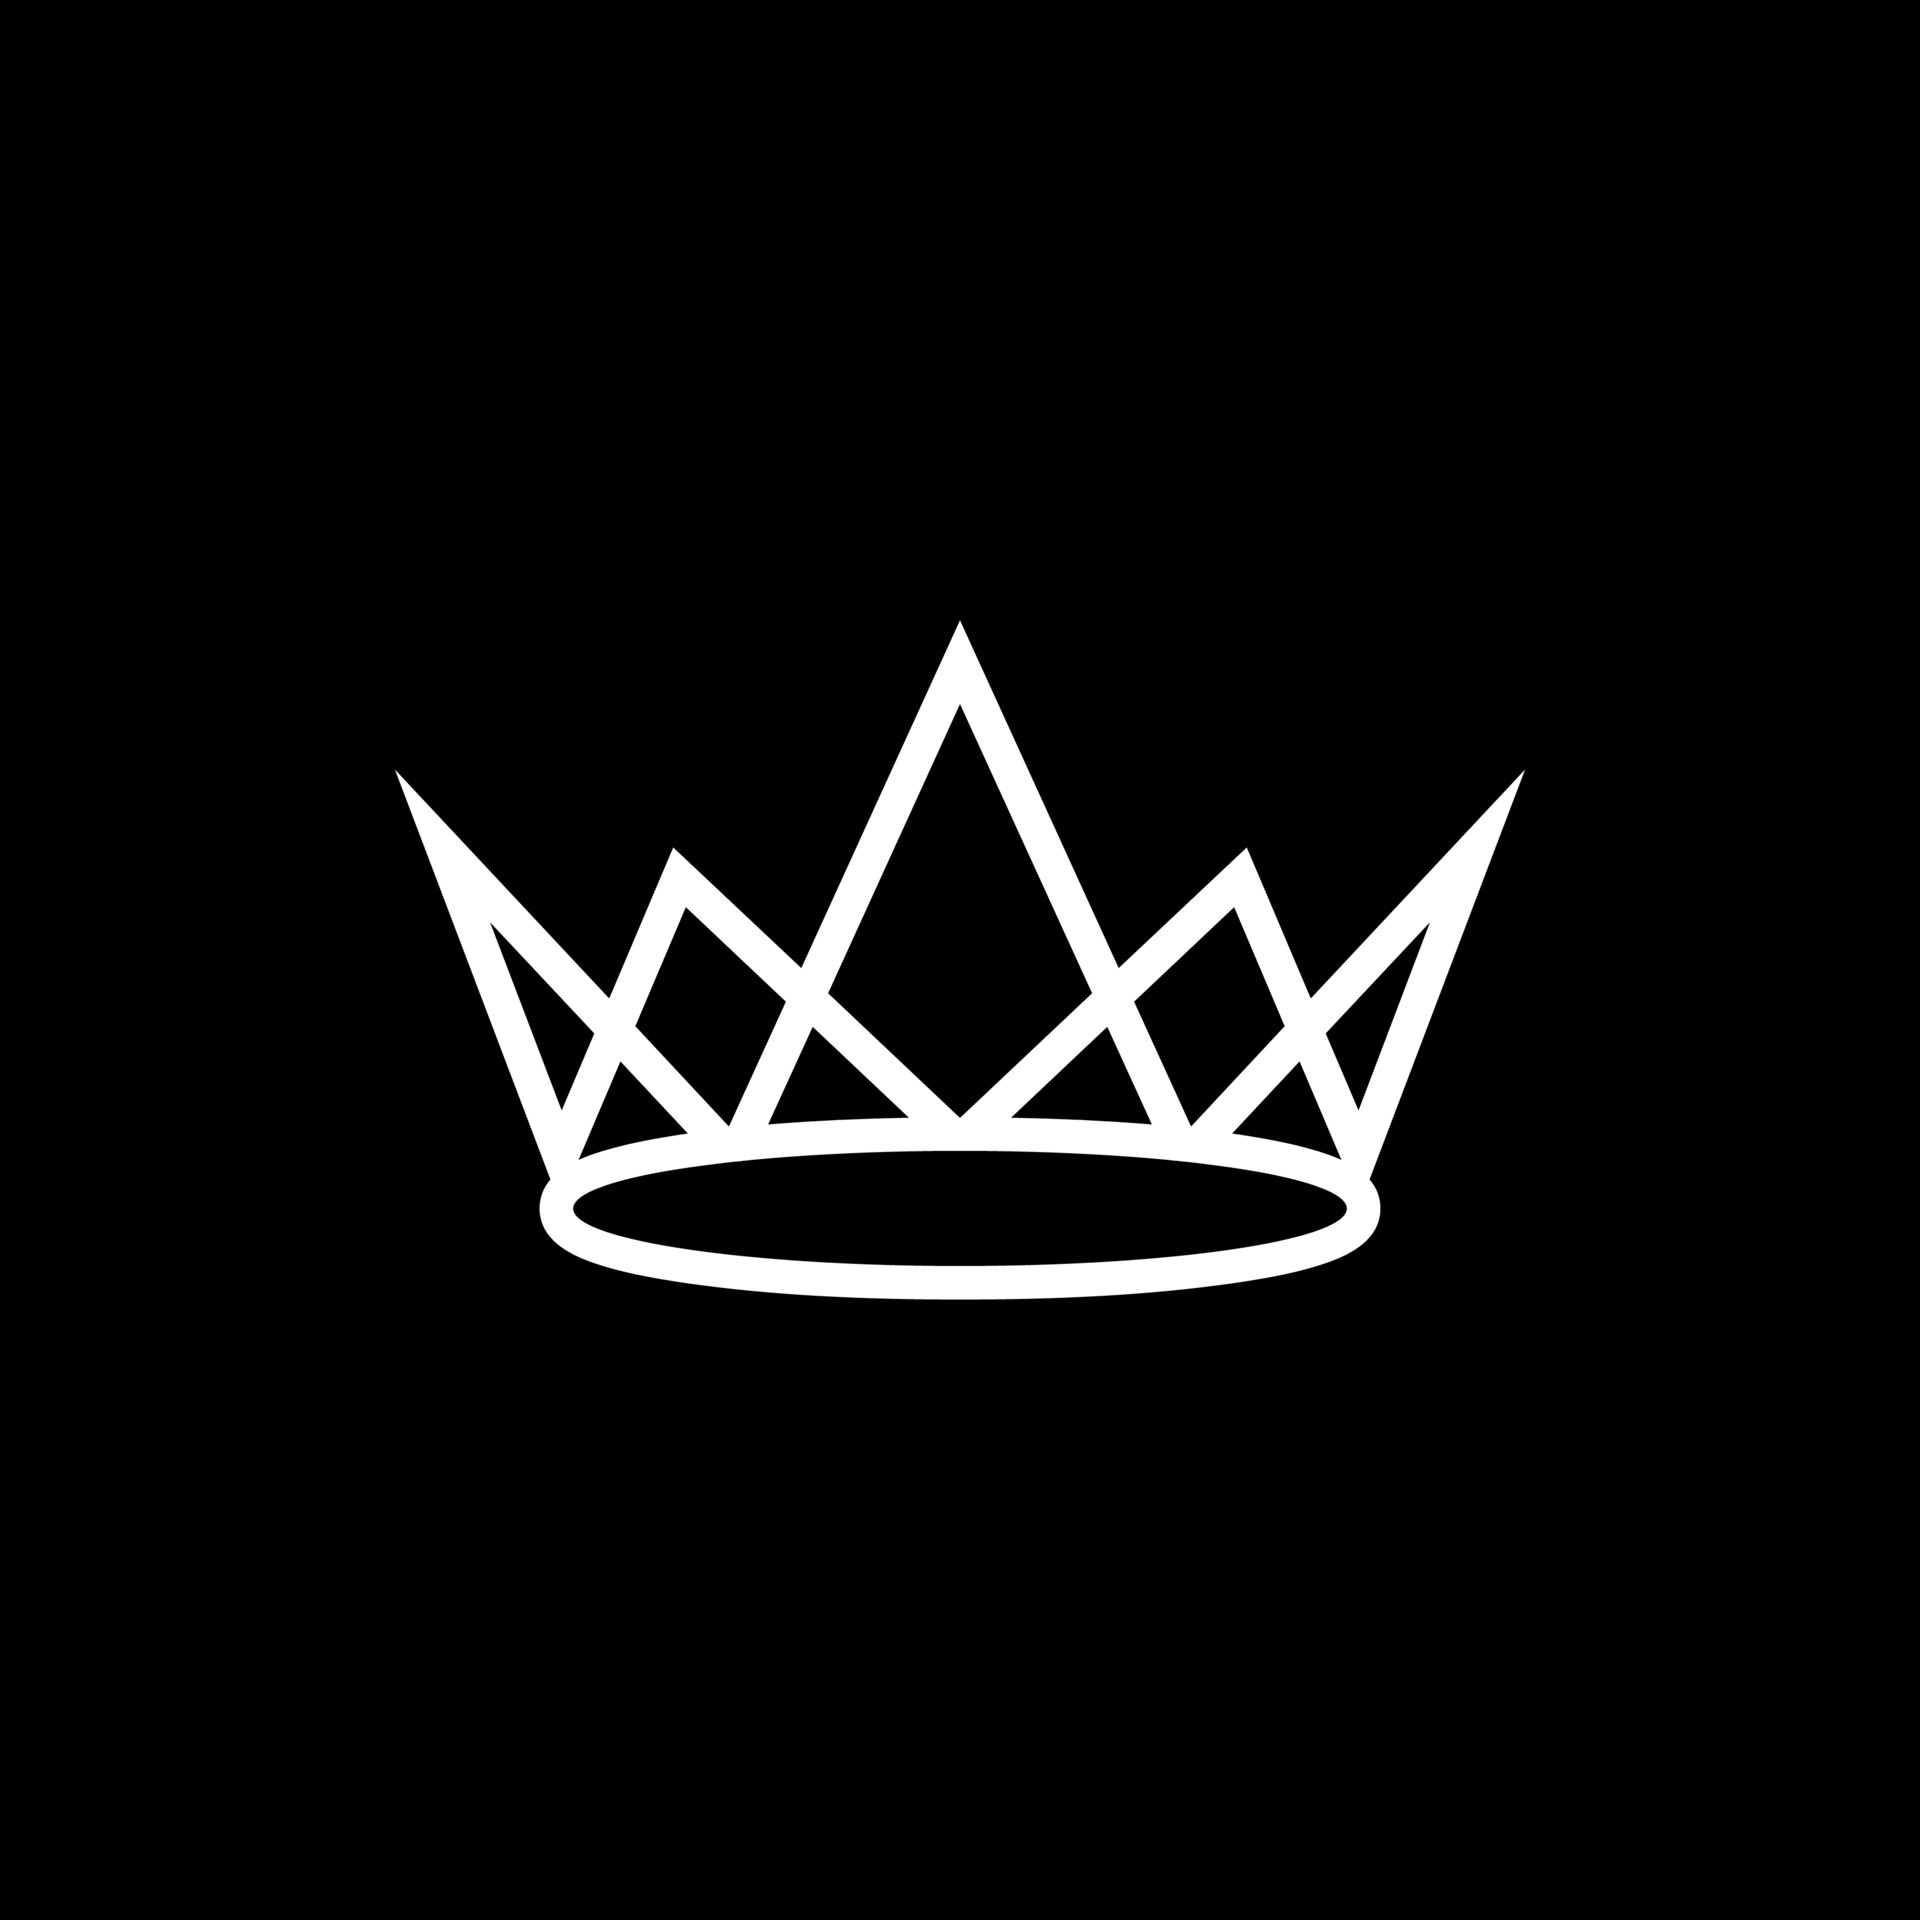 Crown. Crown logo vector. Royal Crown Logo image. Crown icon simple ...